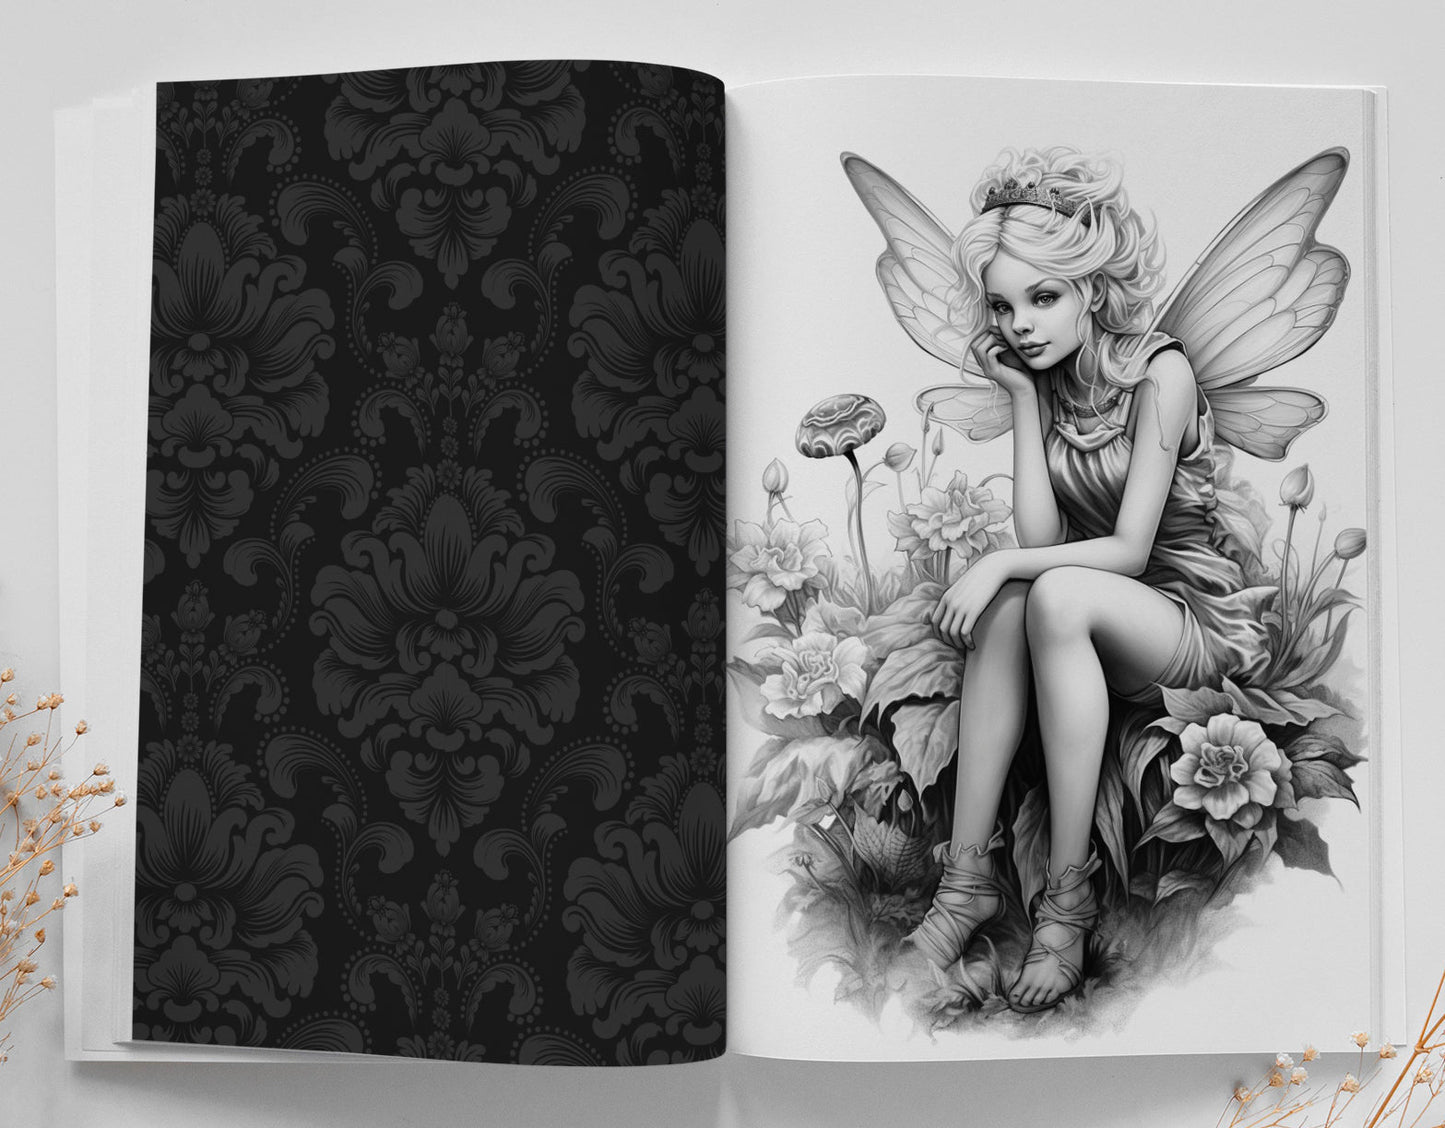 Fairies Coloring Book Grayscale (Digital) - Monsoon Publishing USA